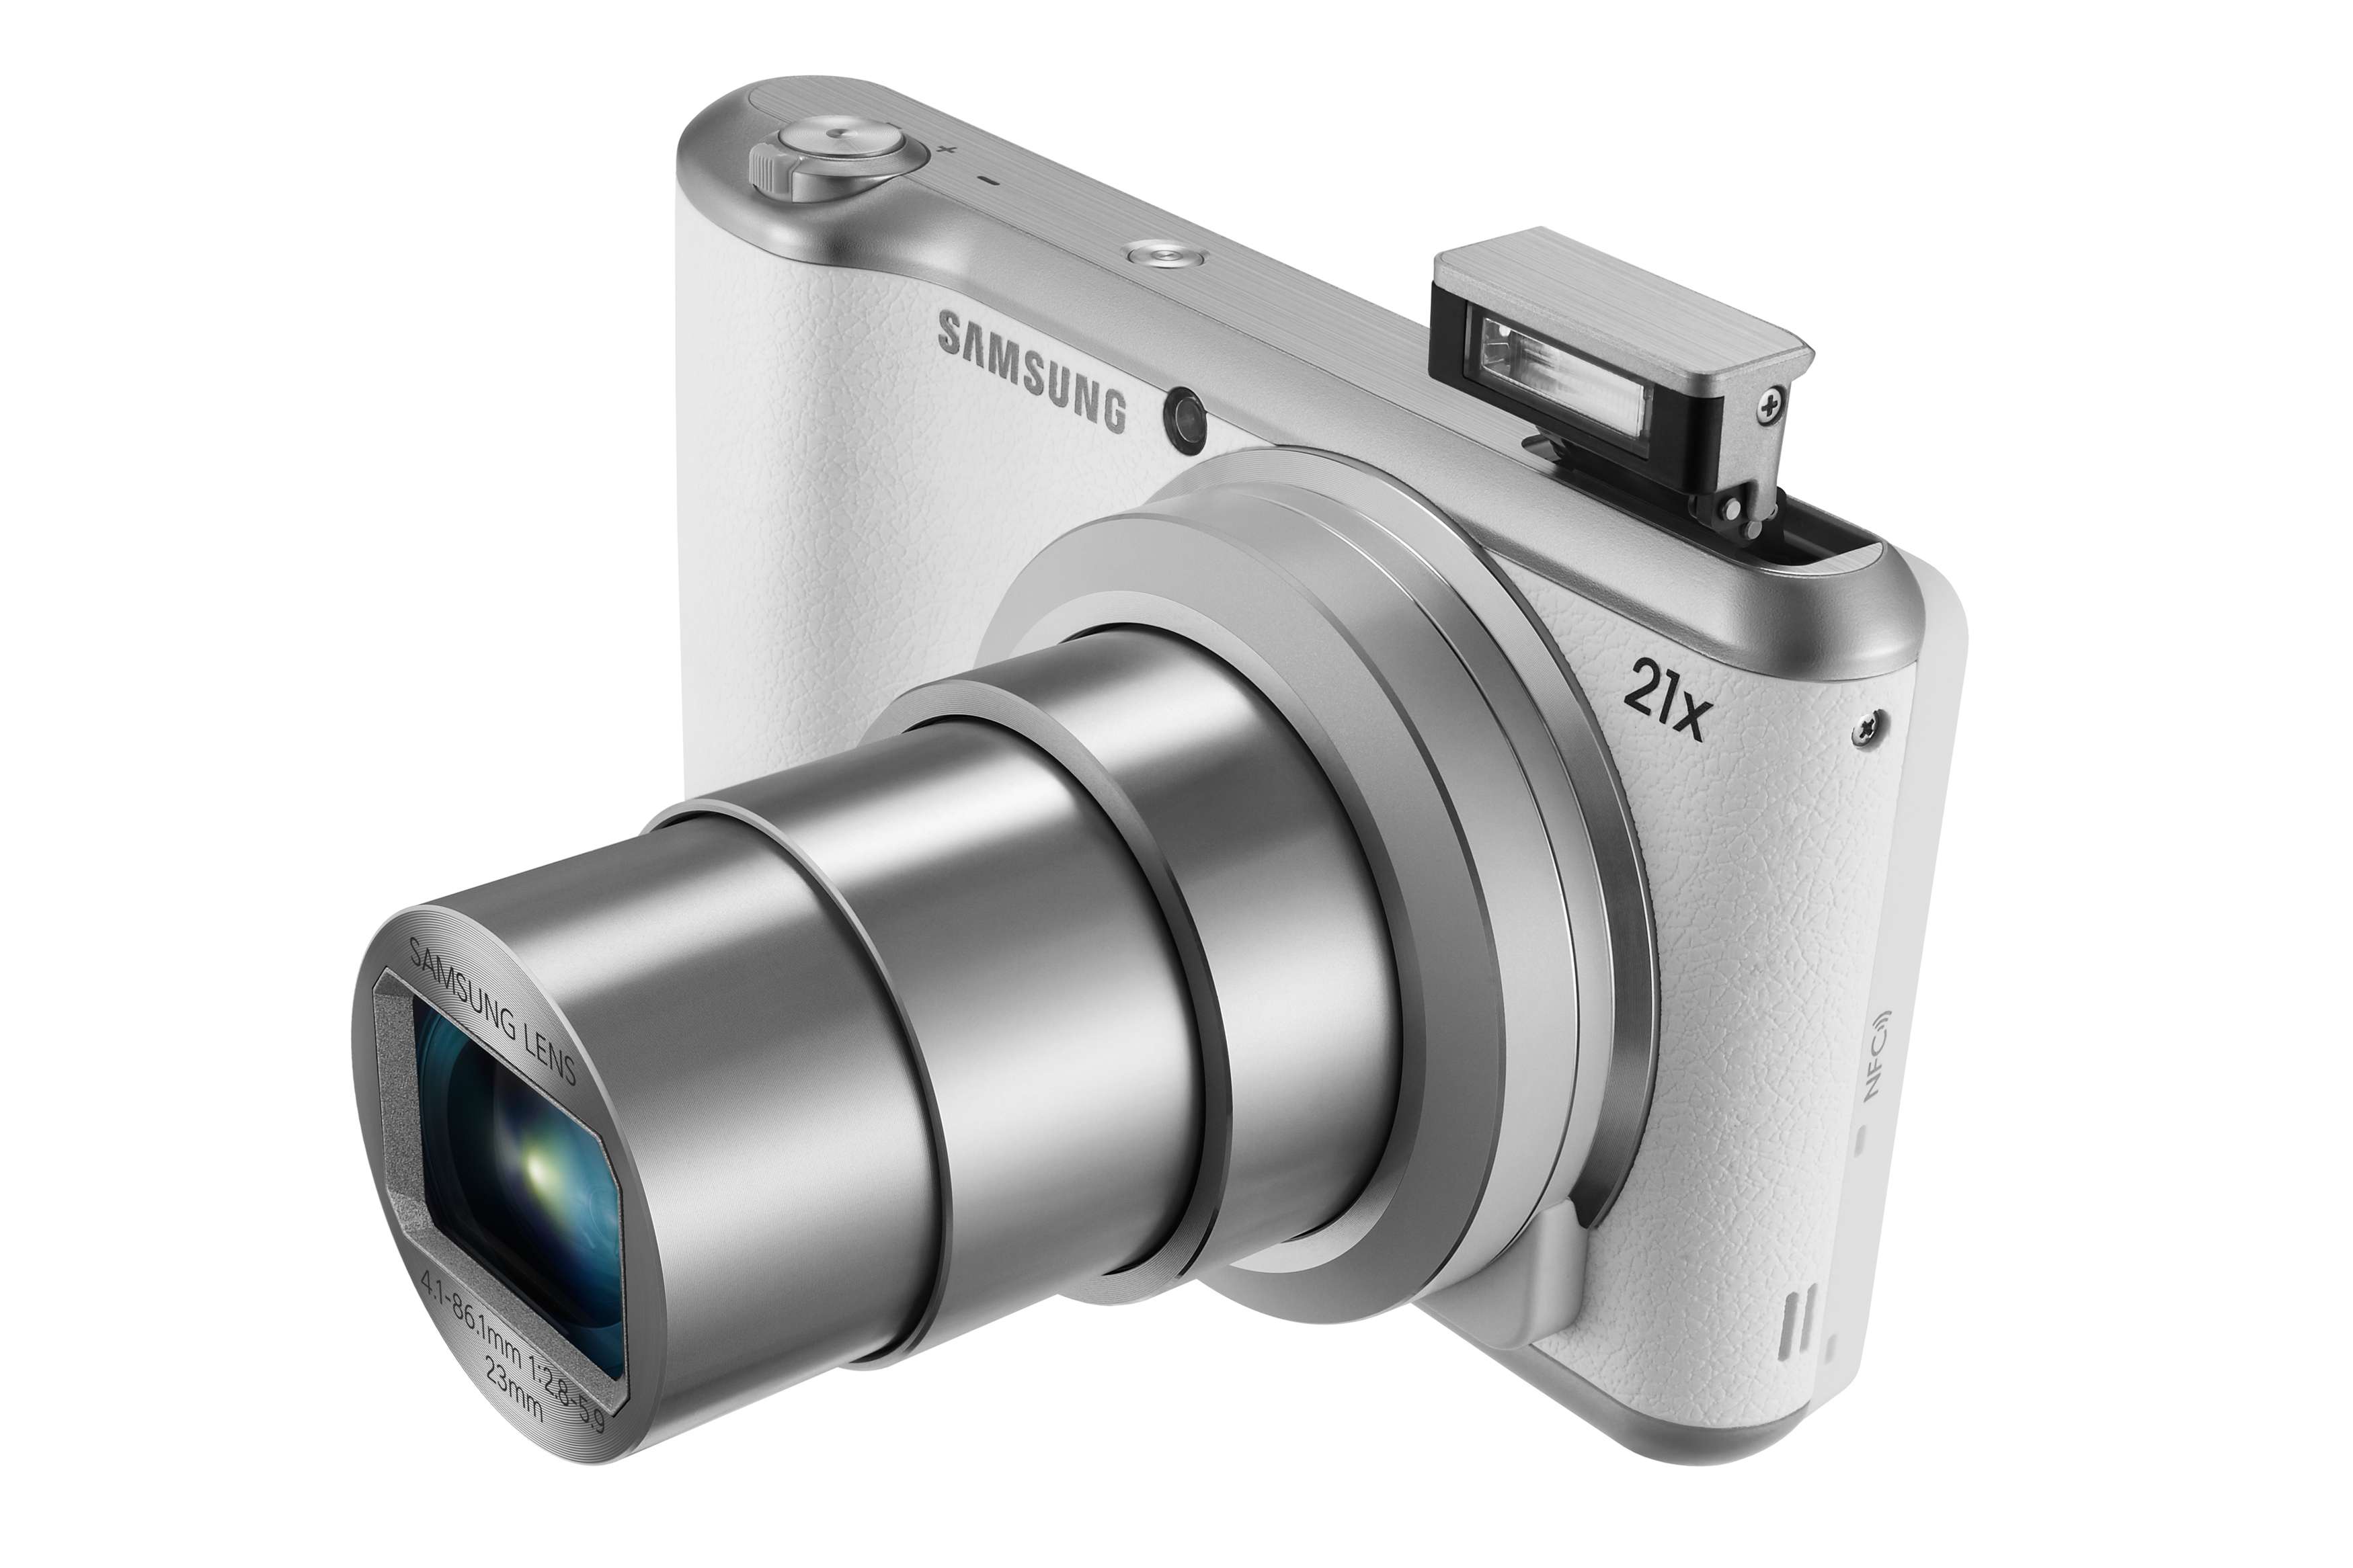 Samsung Galaxy Camera 2 Unveiled